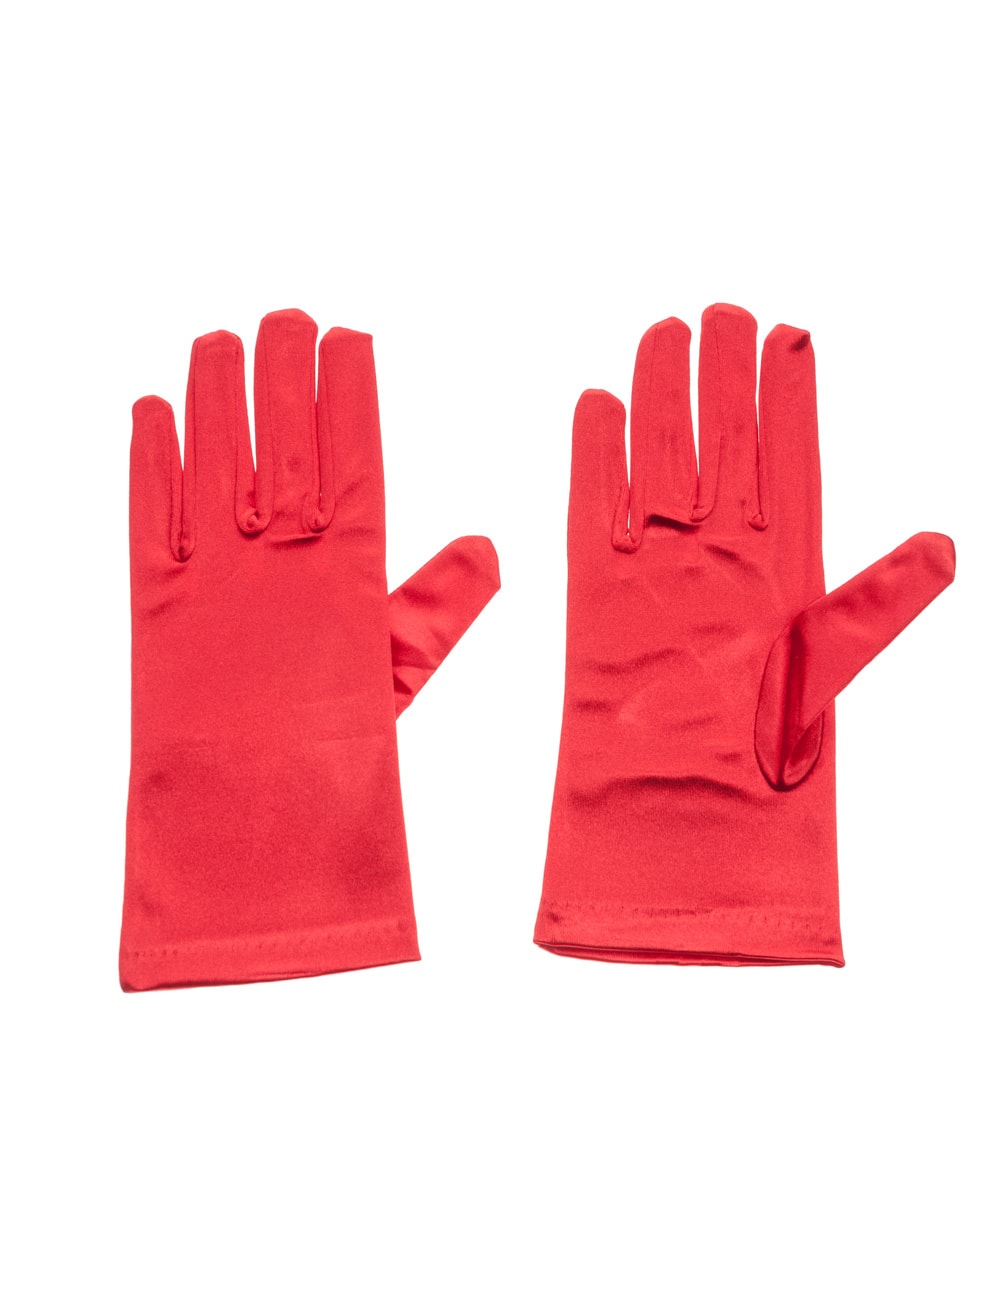 Handschuhe kurz Satin 20cm Damen rot one size